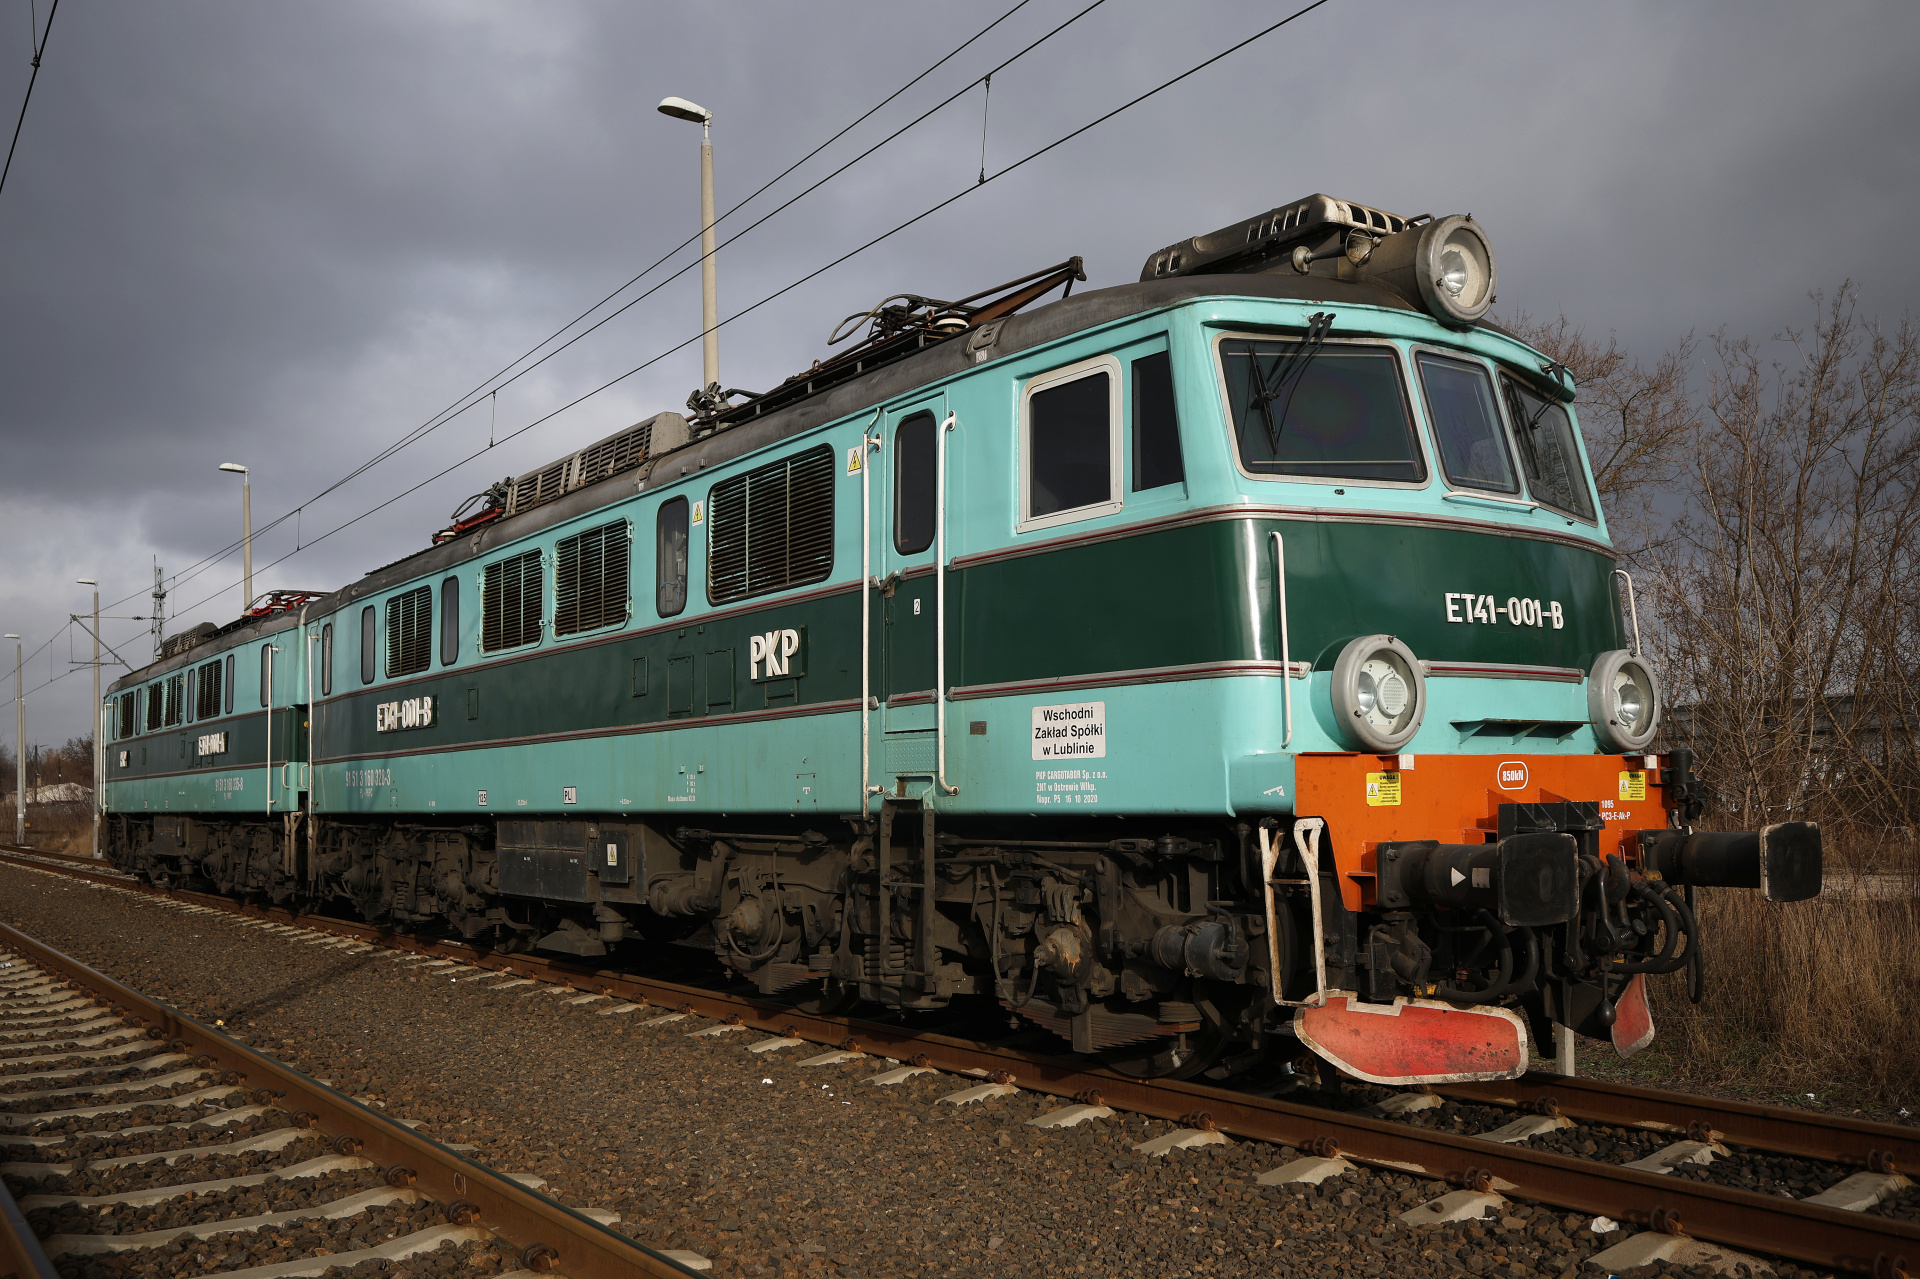 HCP 203E ET41-001 (retro livery) (Vehicles » Trains and Locomotives)